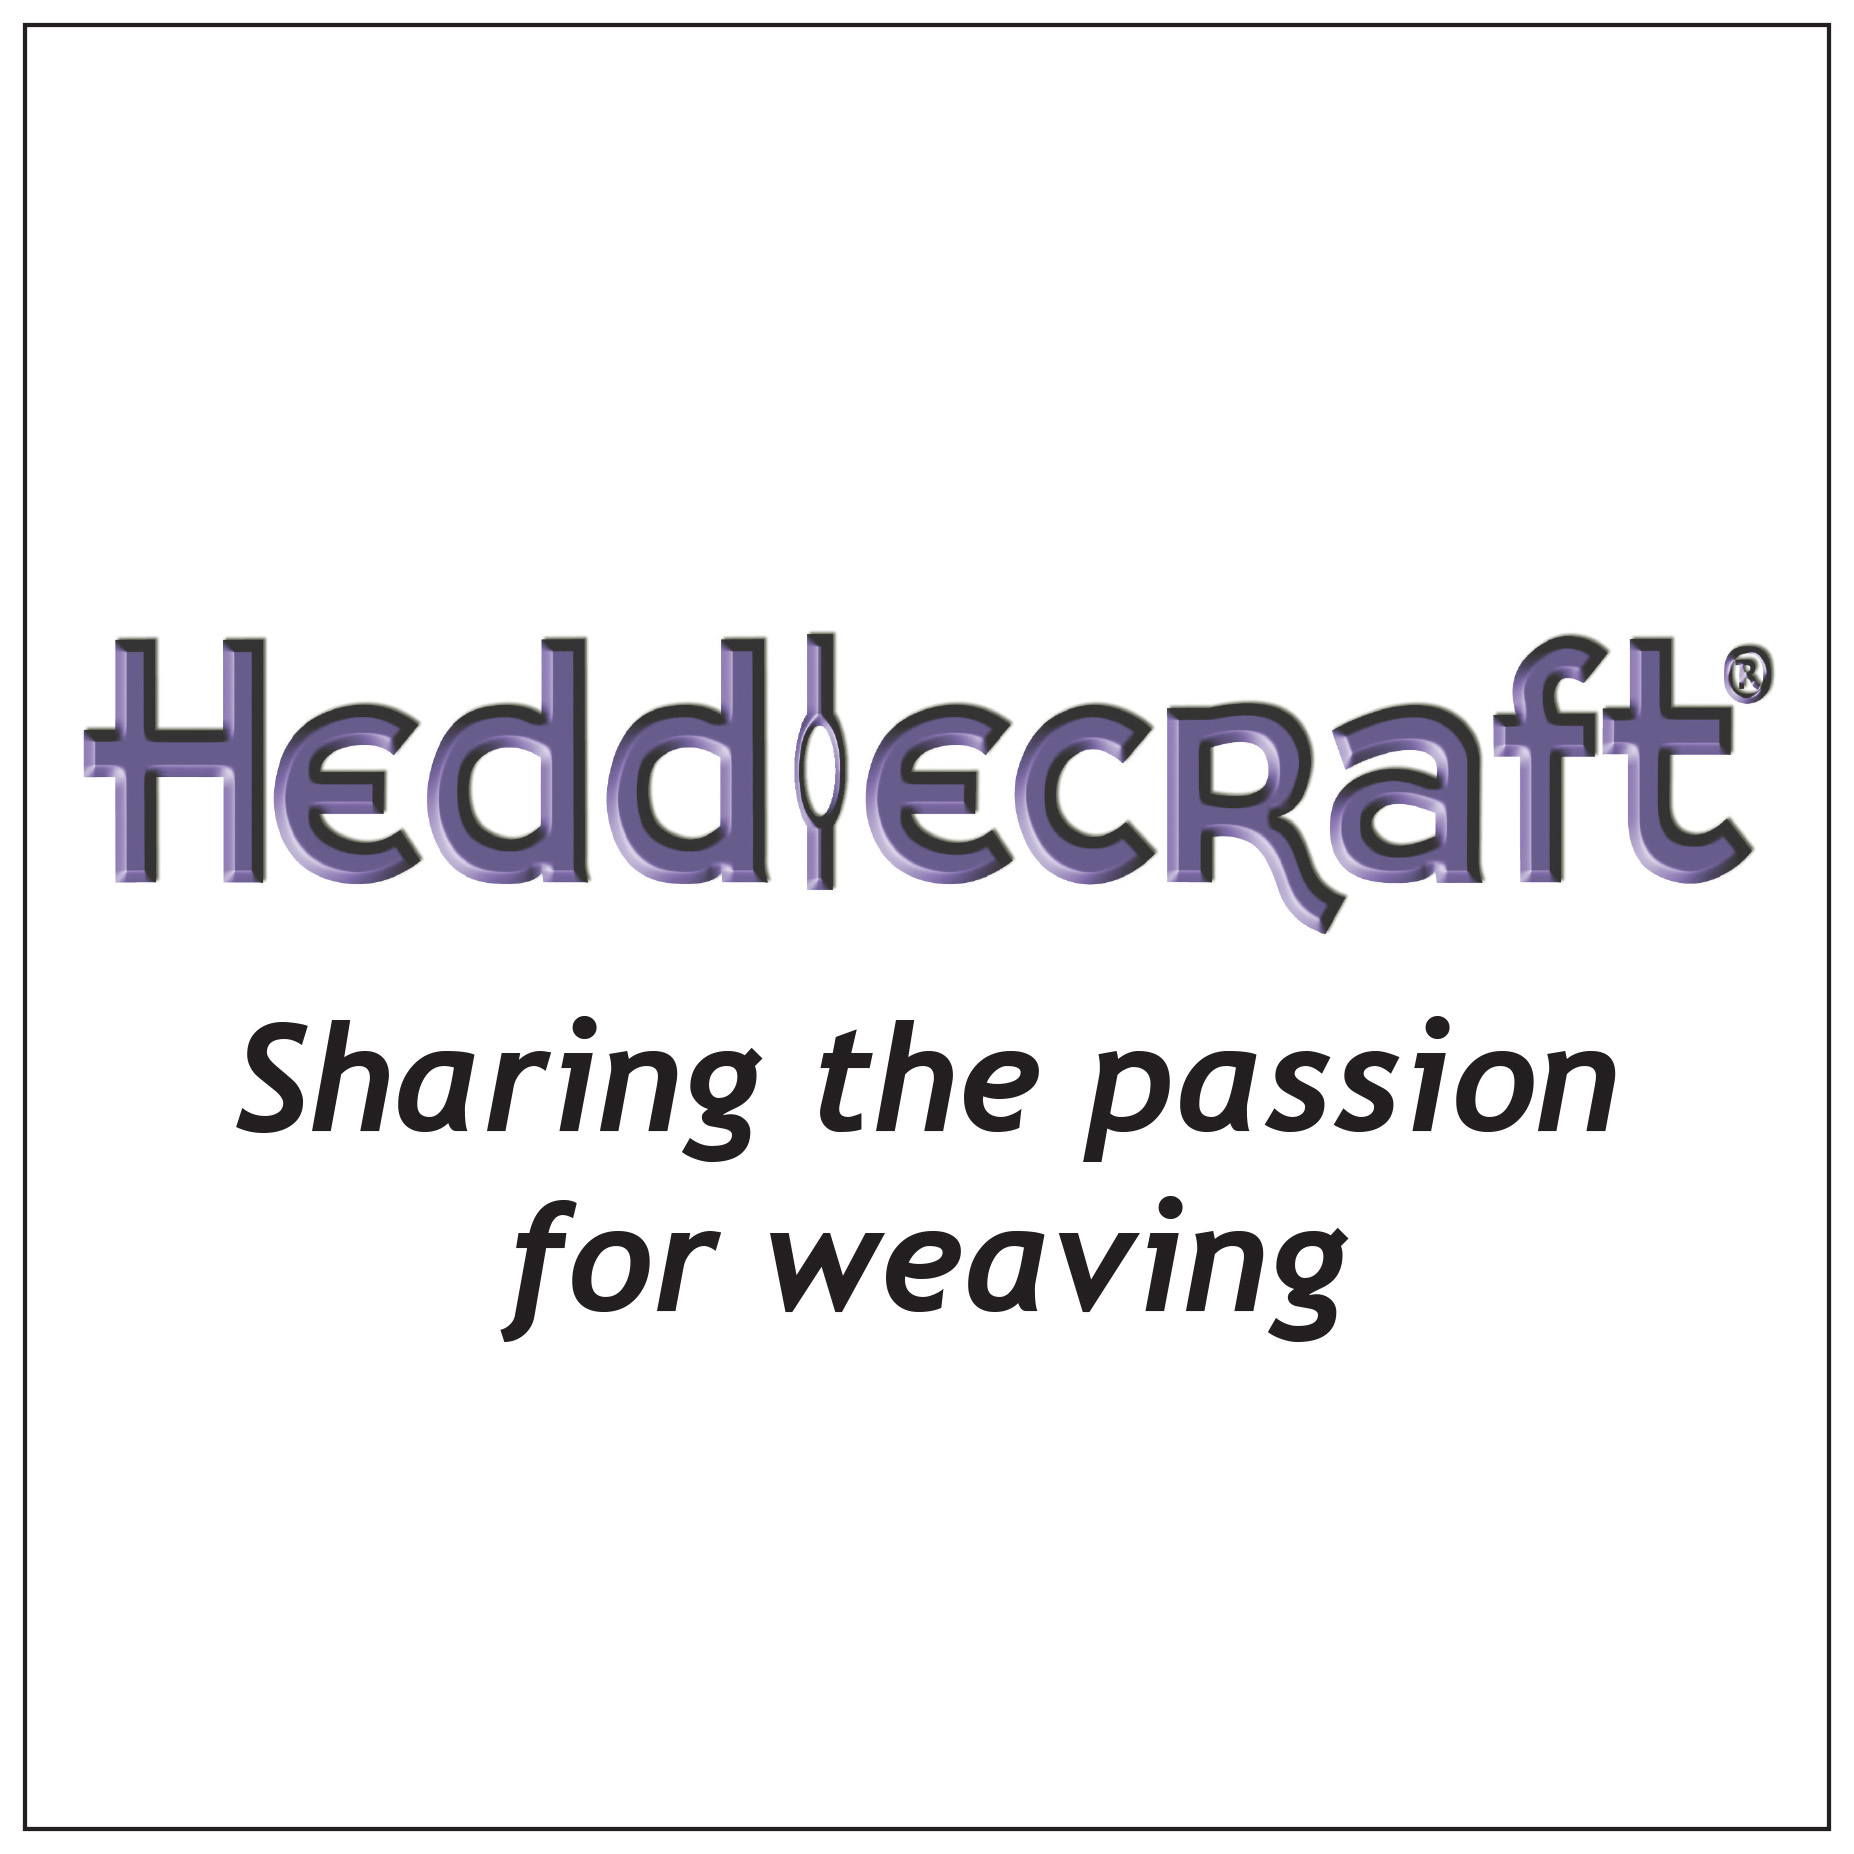 Advertisers-Sponsors - Heddlecraft logo w tag line